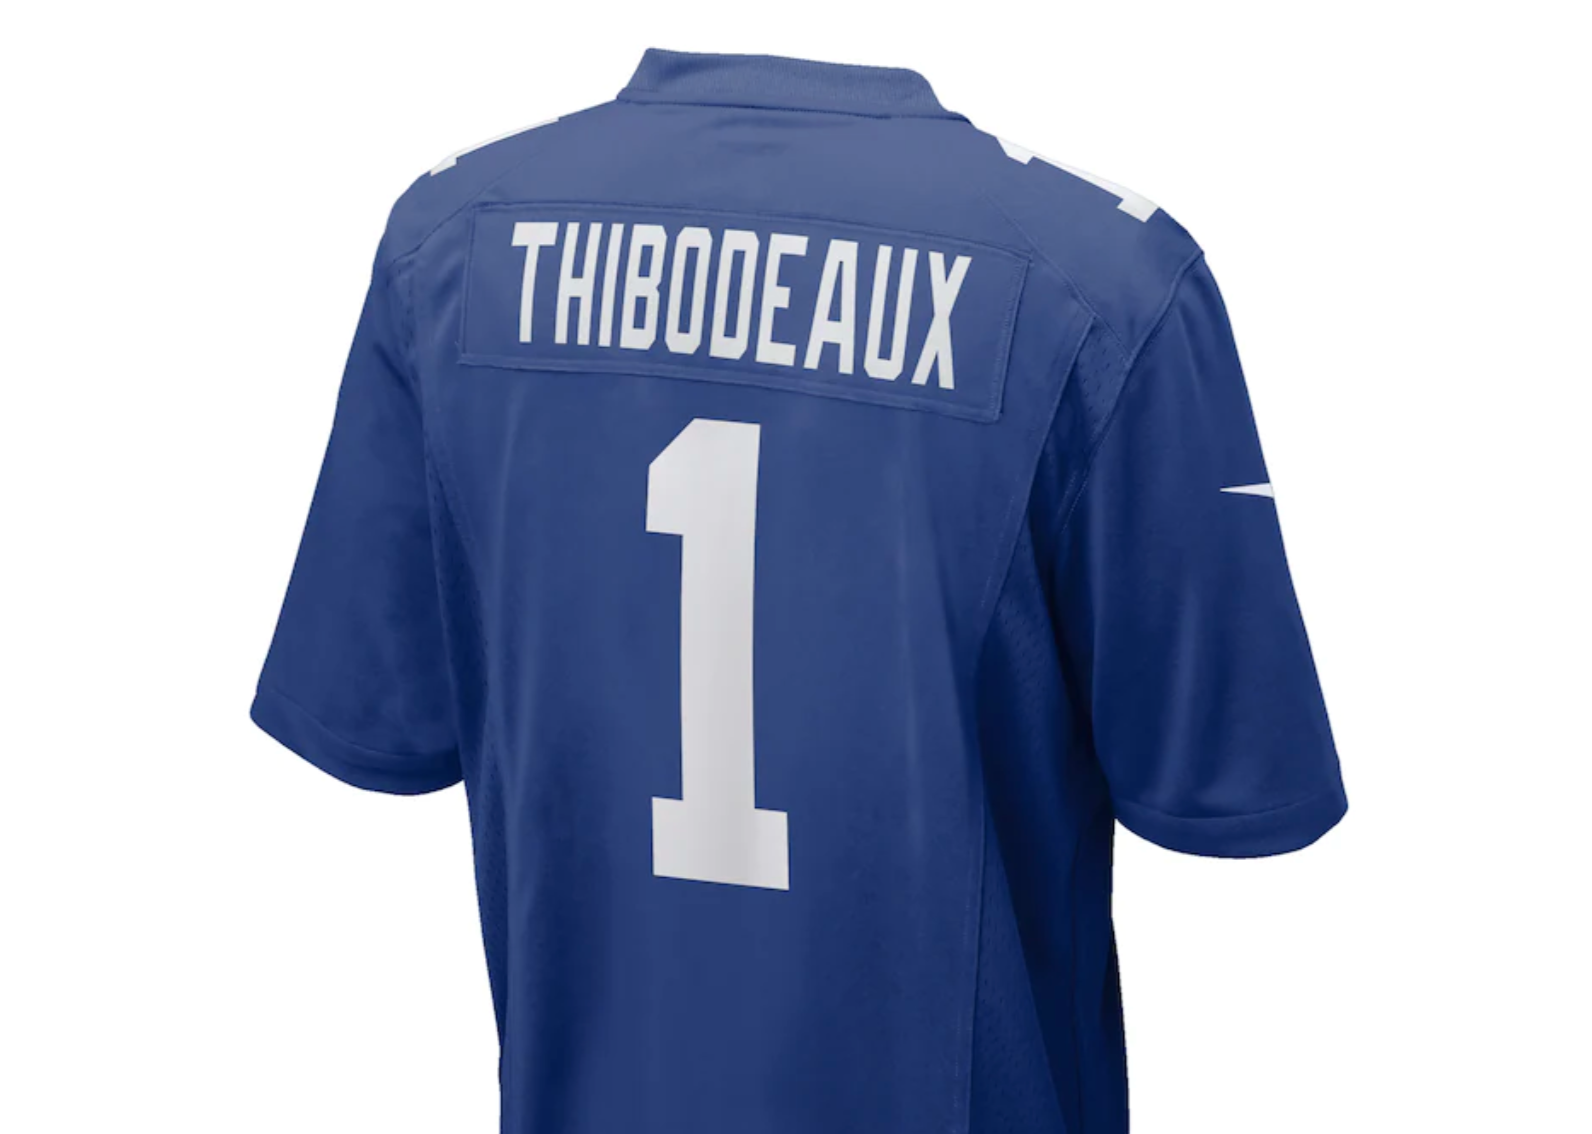 Kayvon Thibodeaux New York Giants NFL draft jersey: How to buy one